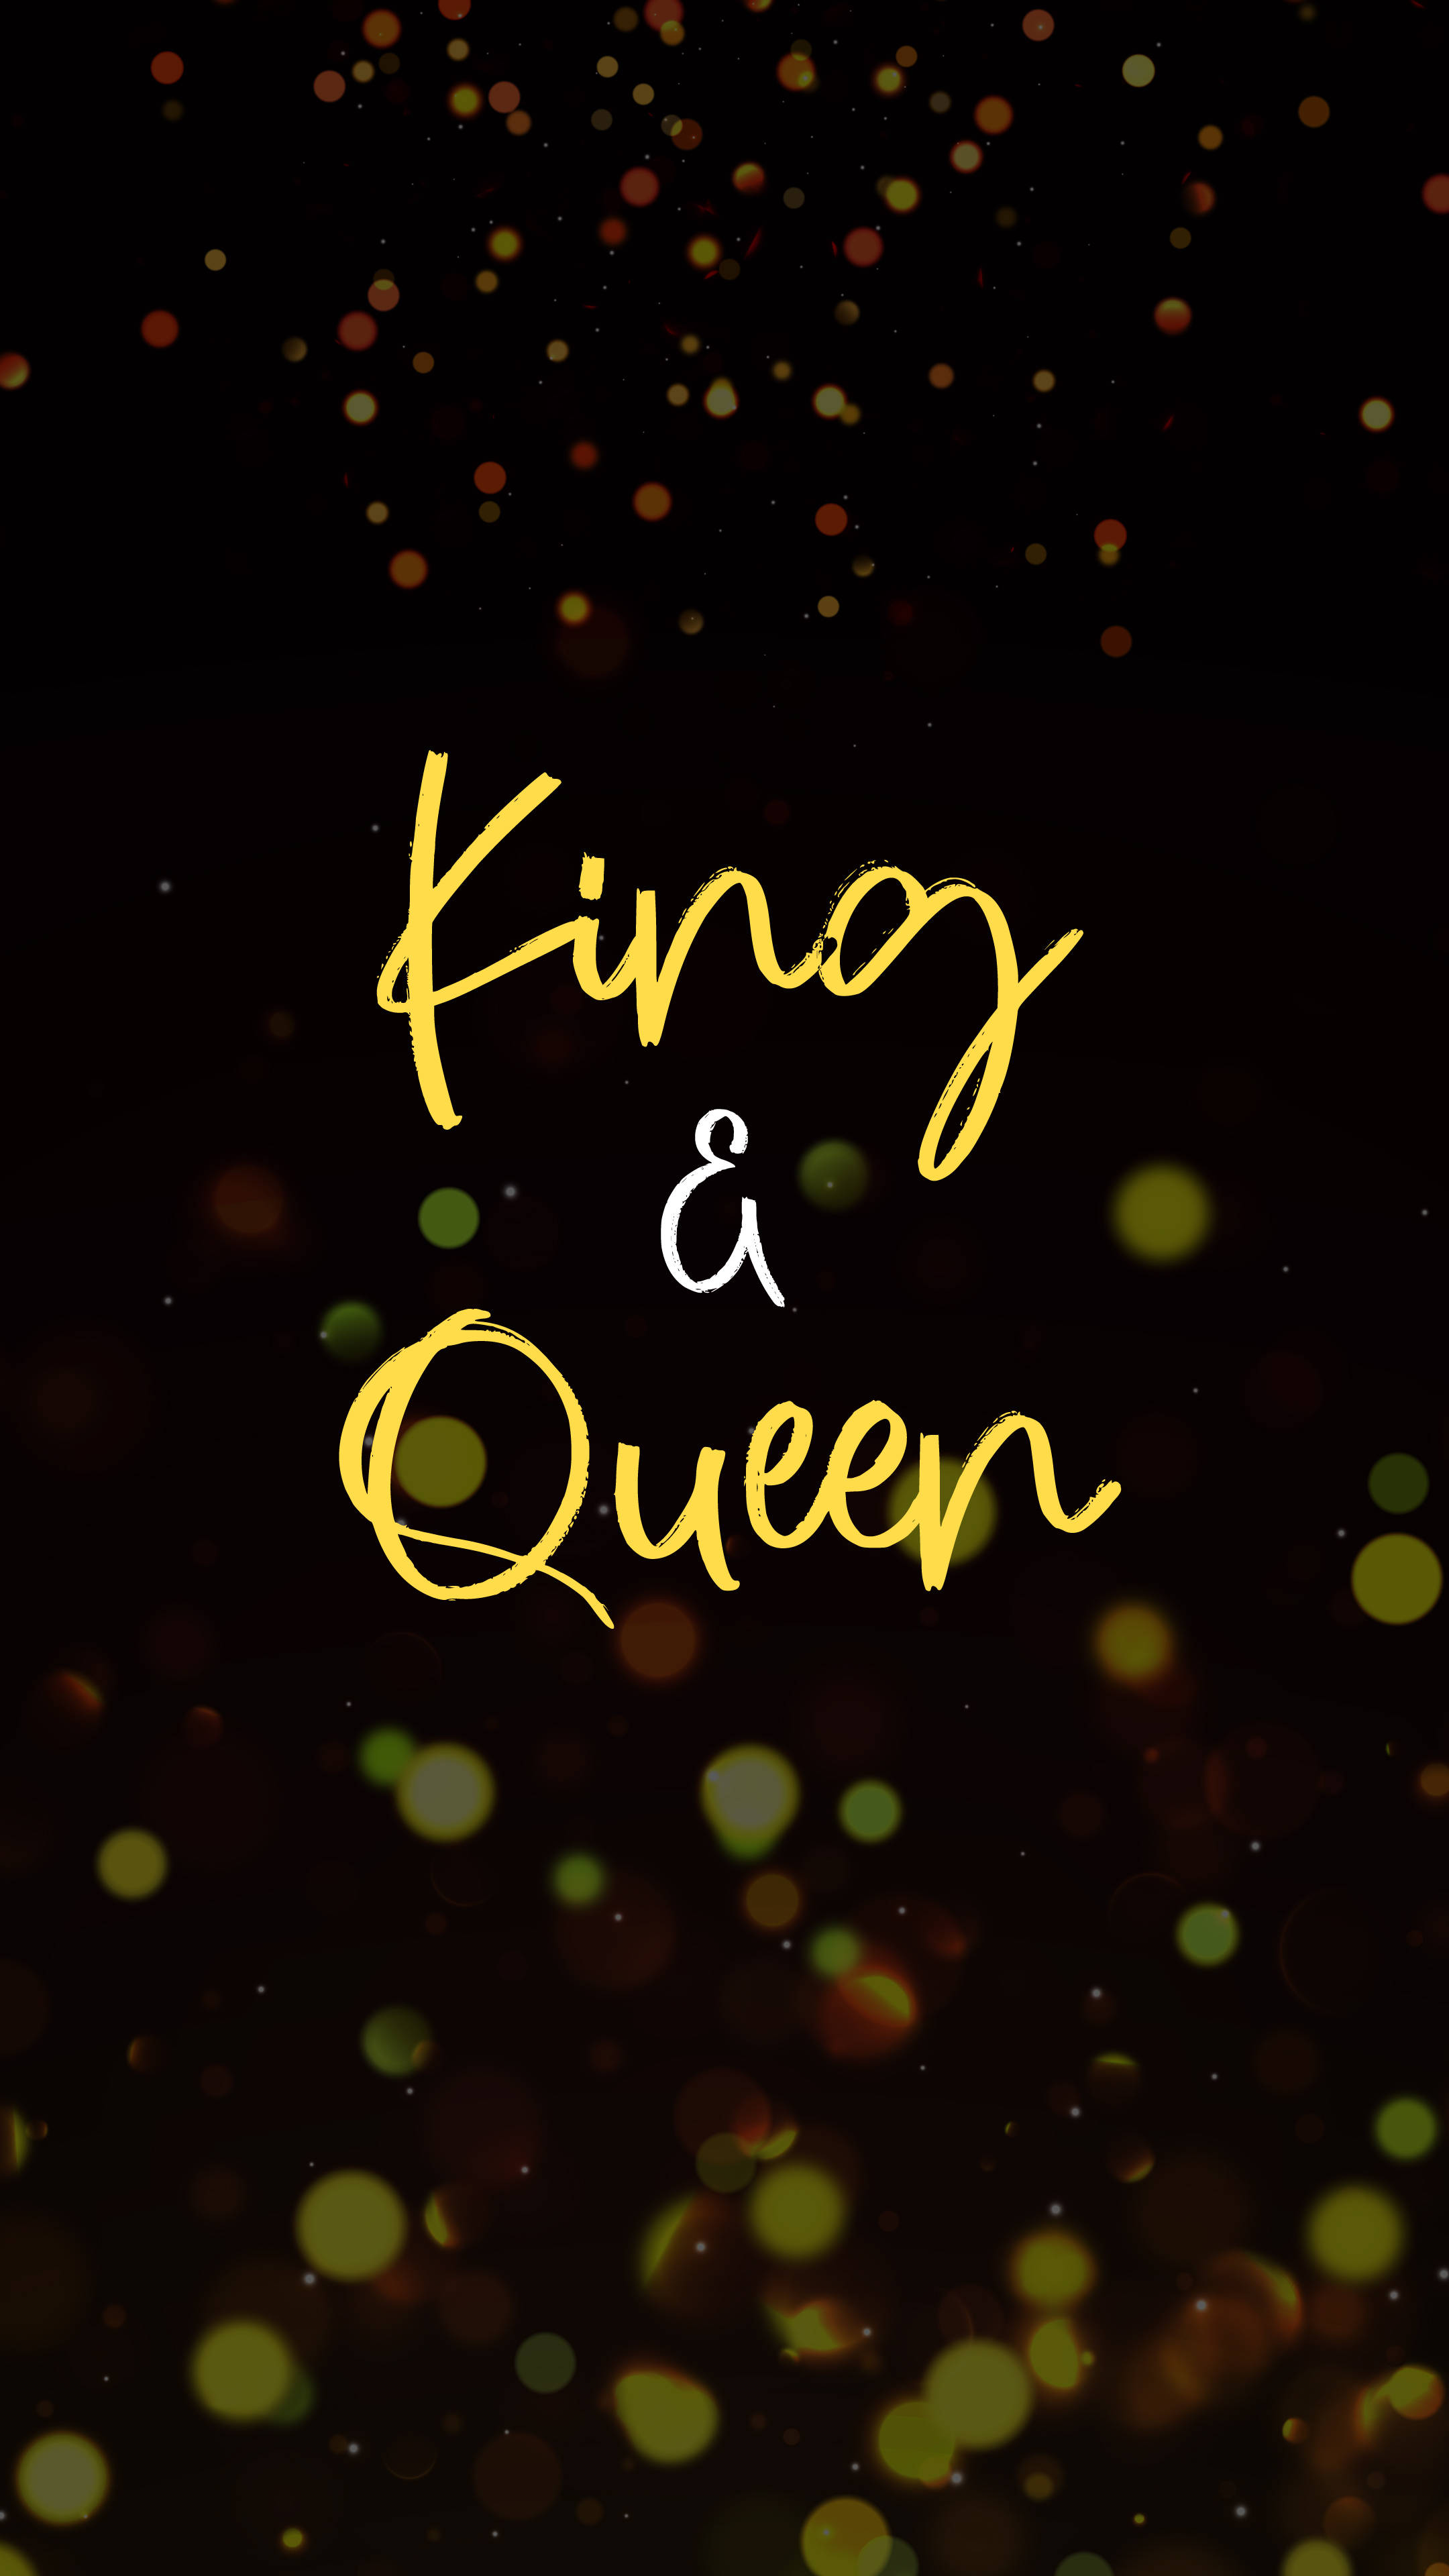 Download Elegant King And Queen Phone Wallpaper 